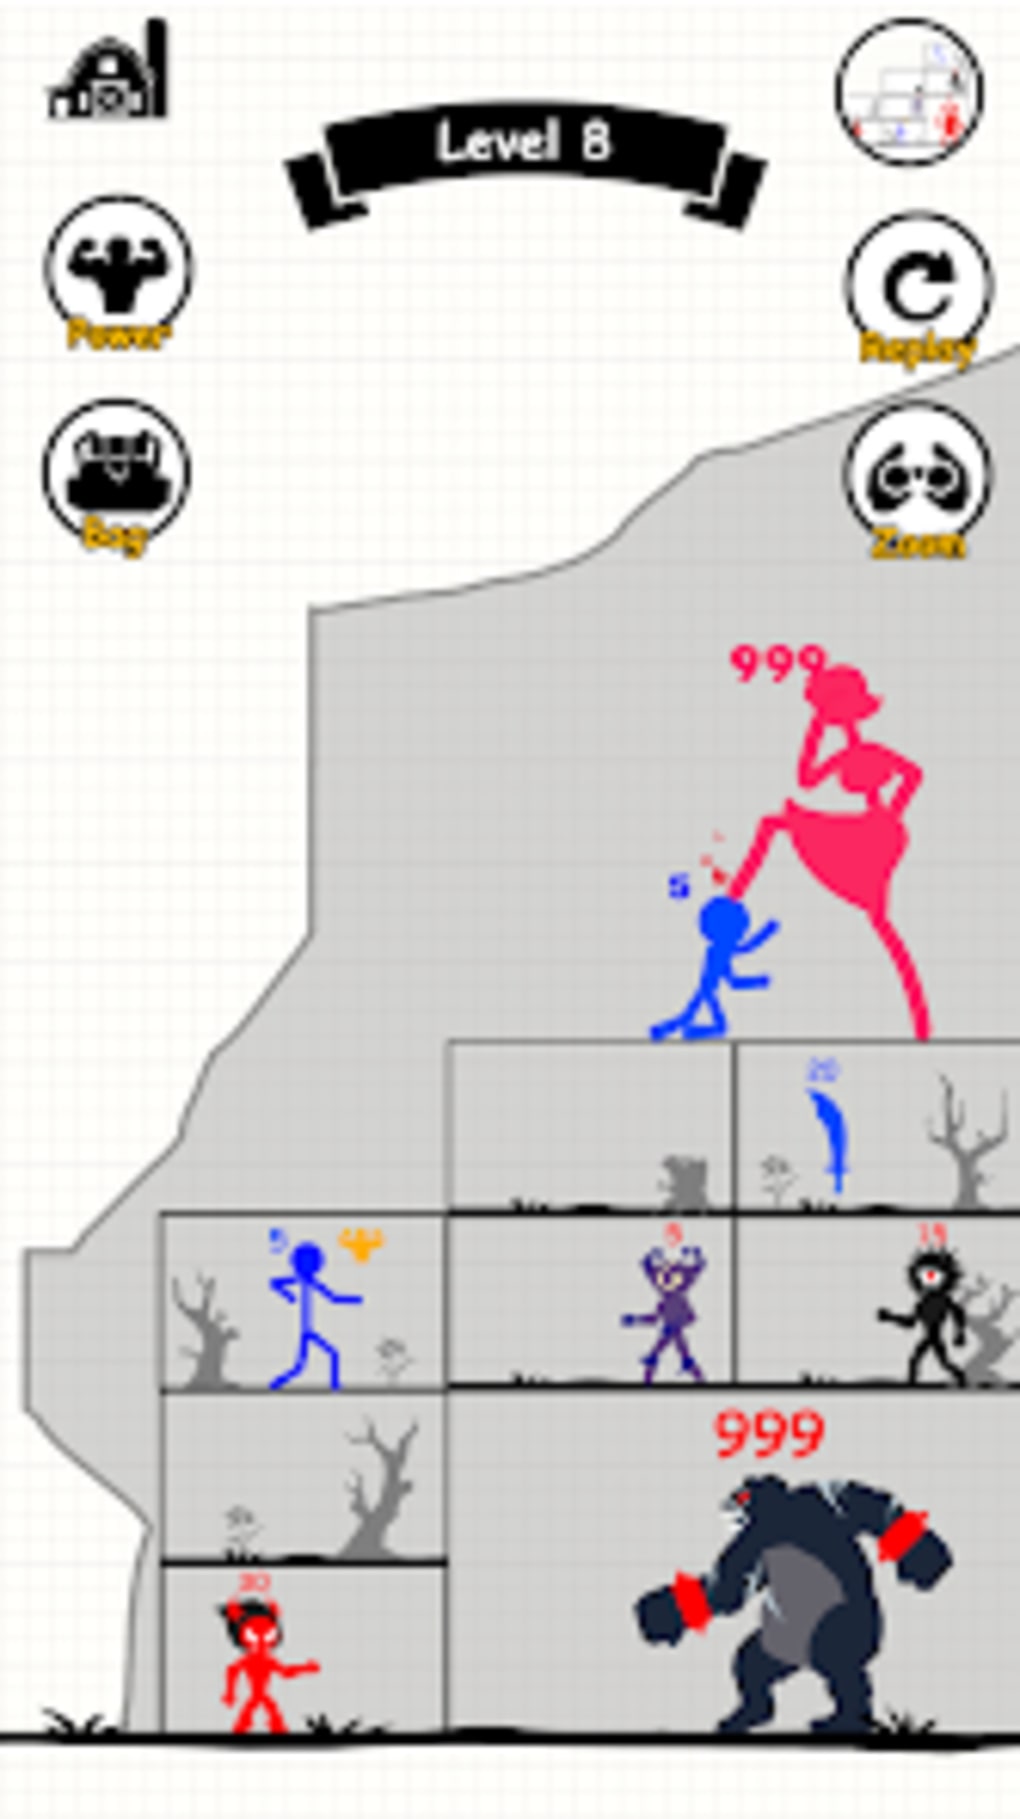 Stick Fight: The Game Online APK pour Android Télécharger